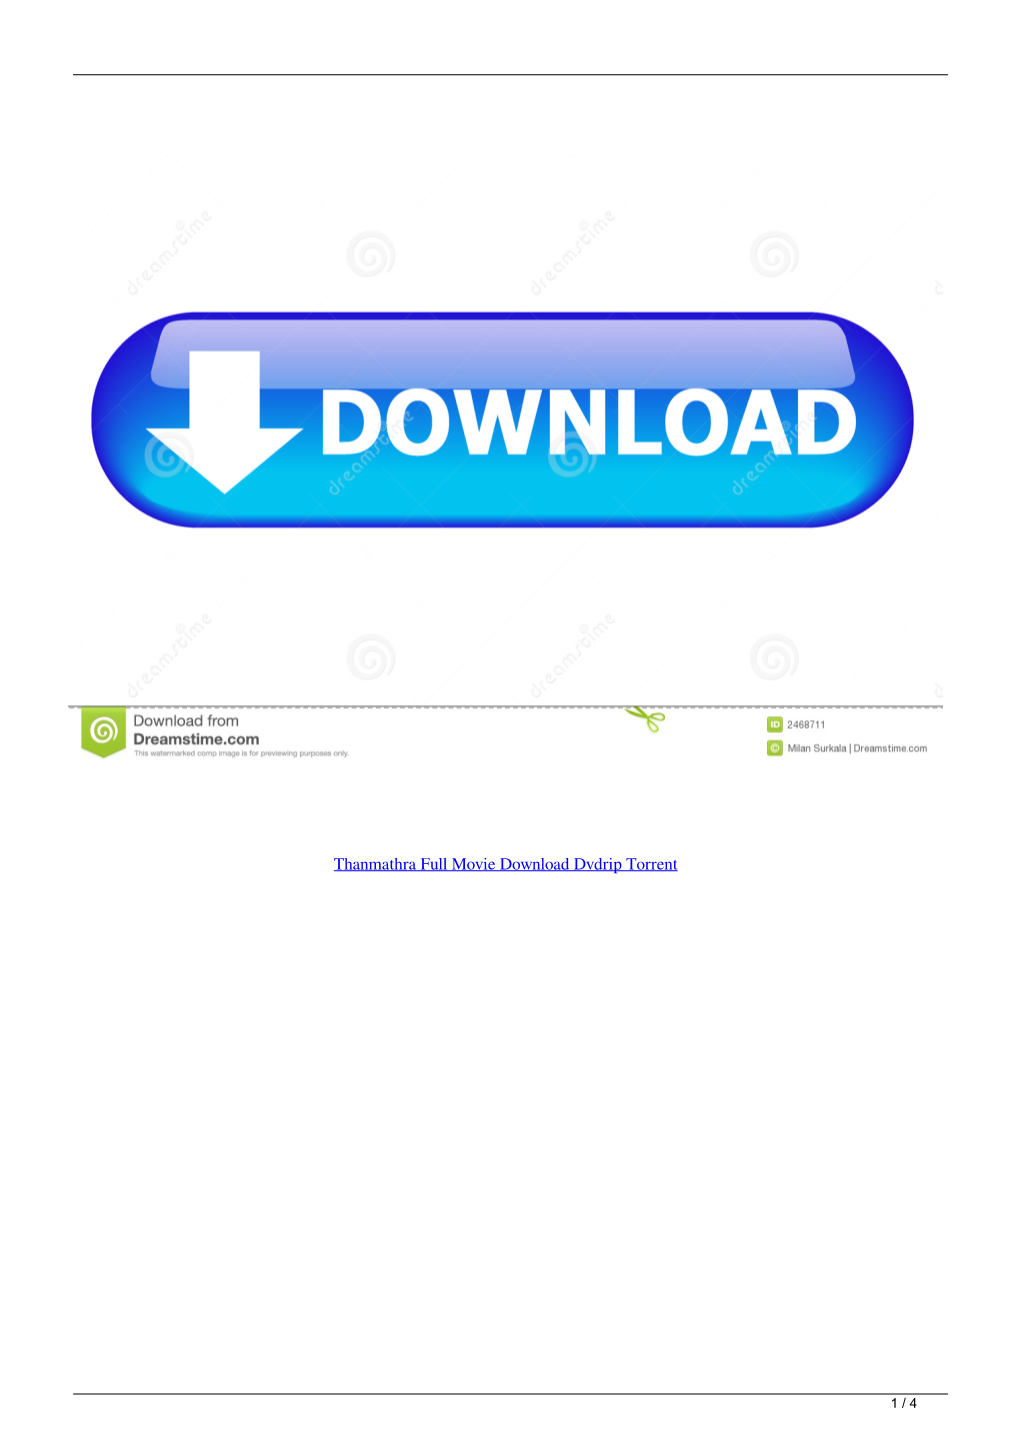 Thanmathra Full Movie Download Dvdrip Torrent